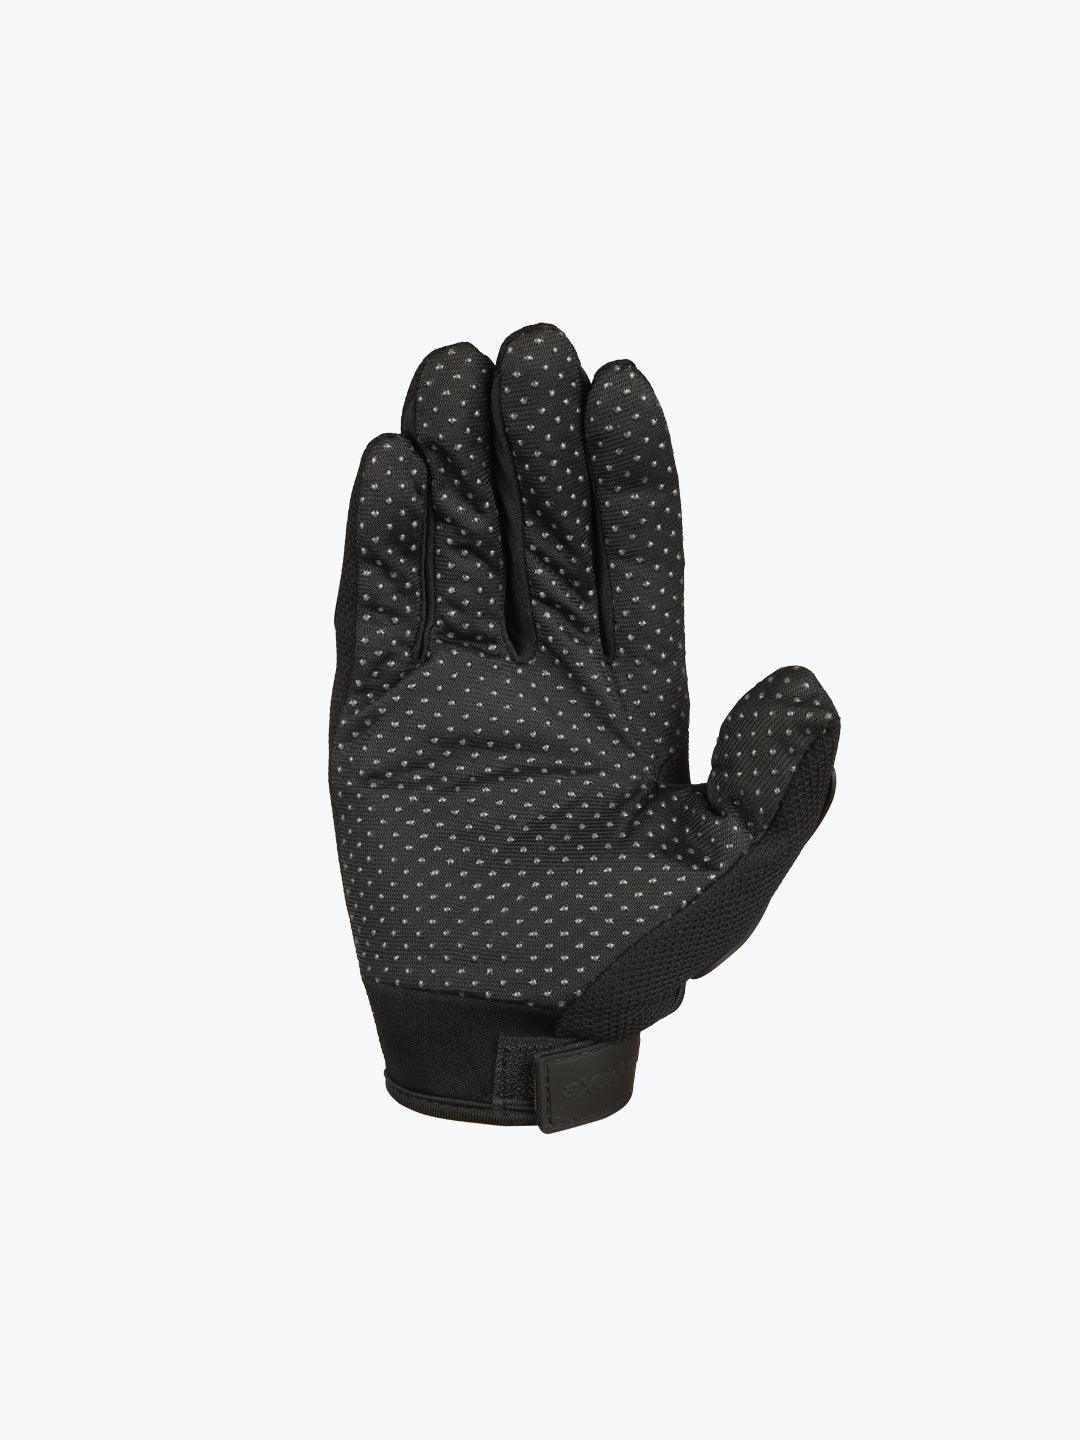 AXG Glove Black Grey - Moto Modz